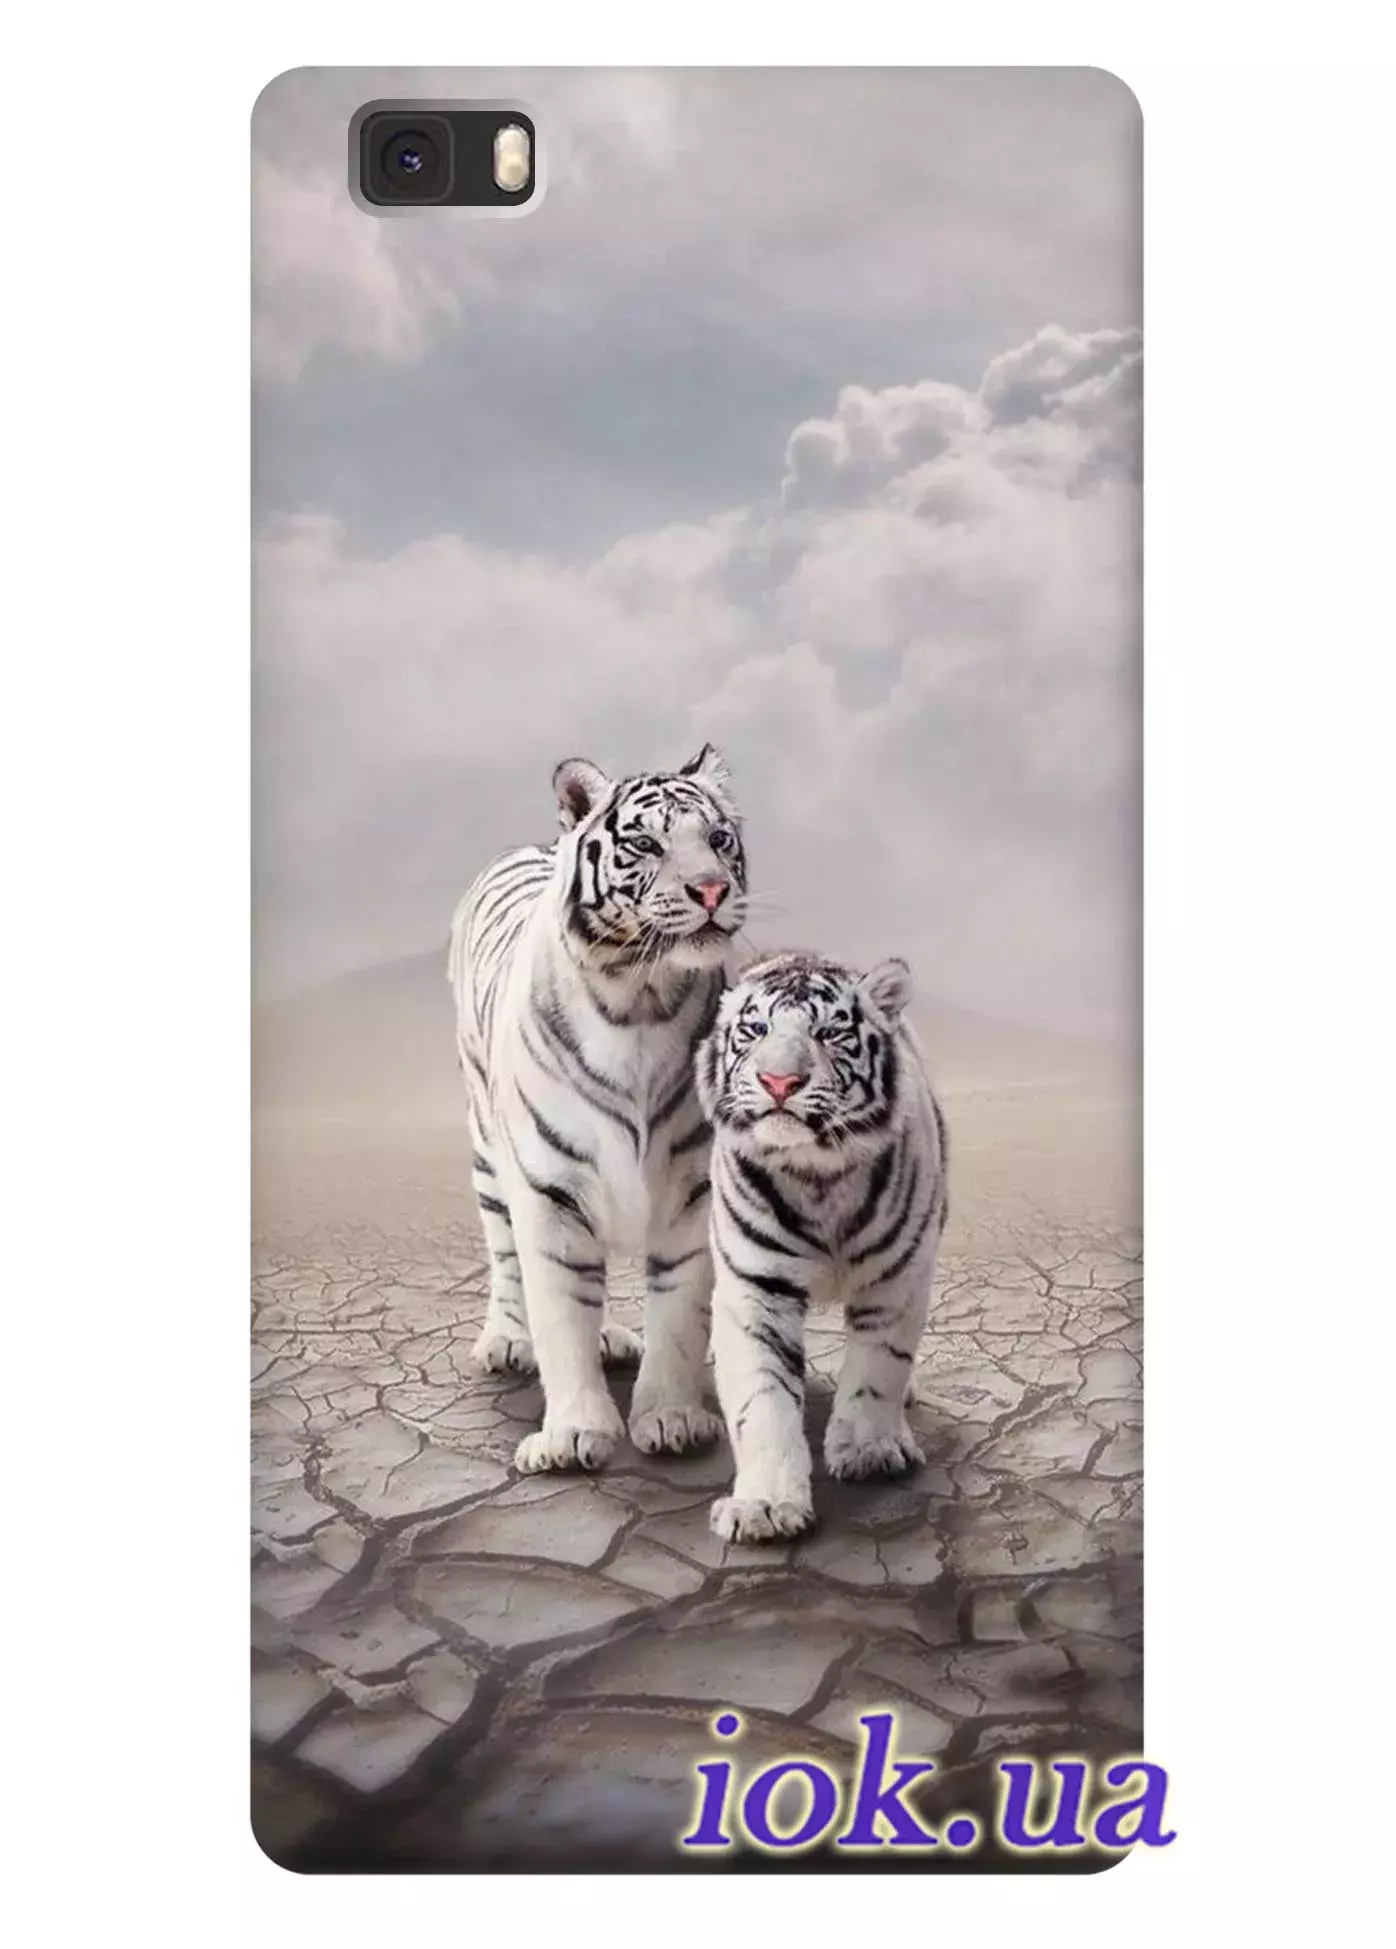 Чехол для Huawei P8 Lite - Два тигра